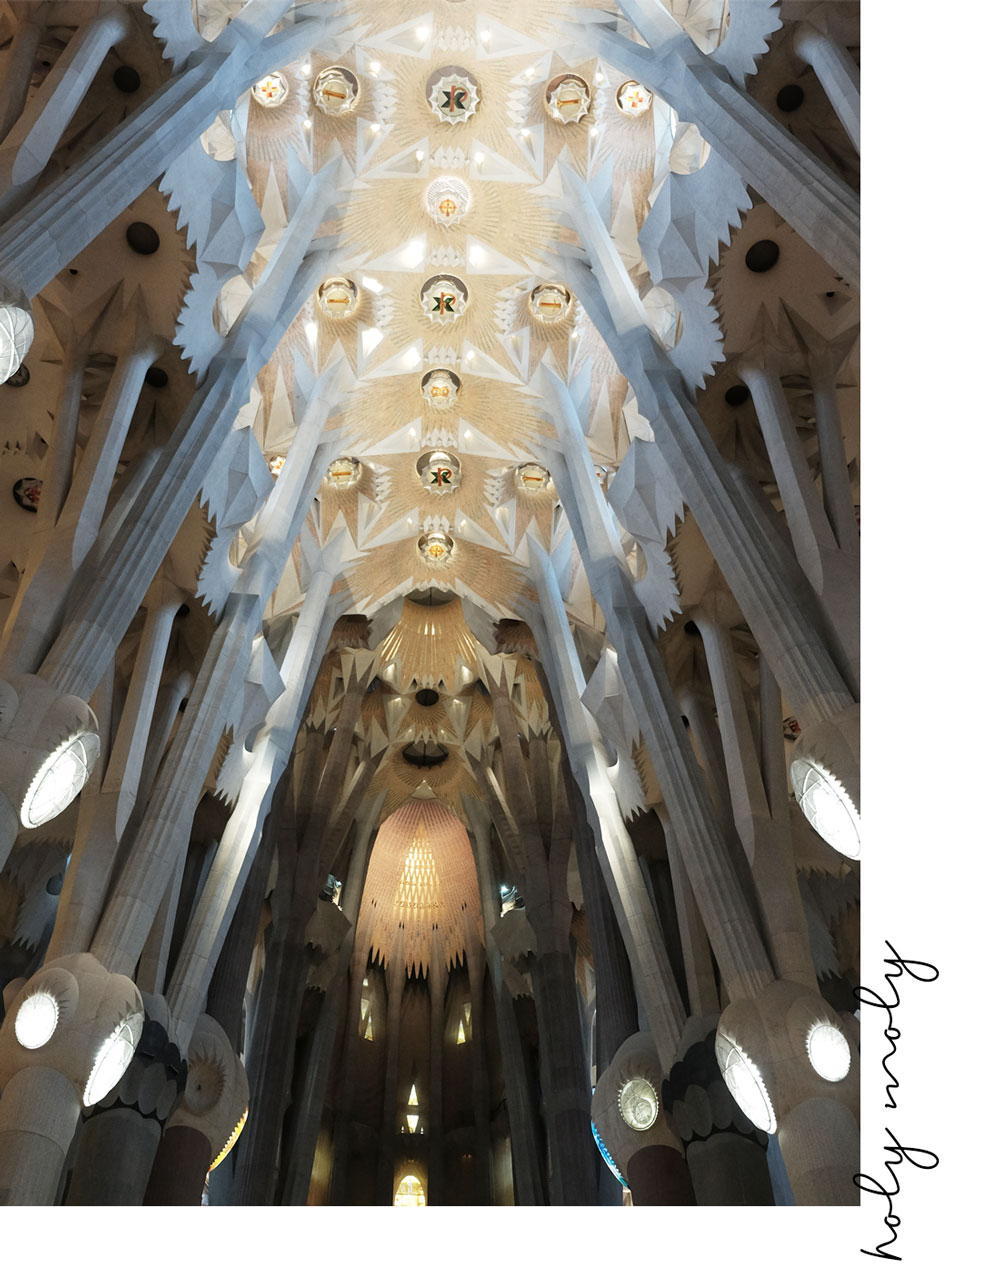  La Sagrada Familia to widok godny uwagi. #1 rzecz do zrobienia w Barcelonie | The Good Living Blog #thingstodoinbarcelona #barcelonatravelguide #barcelona #lasagradafamilia